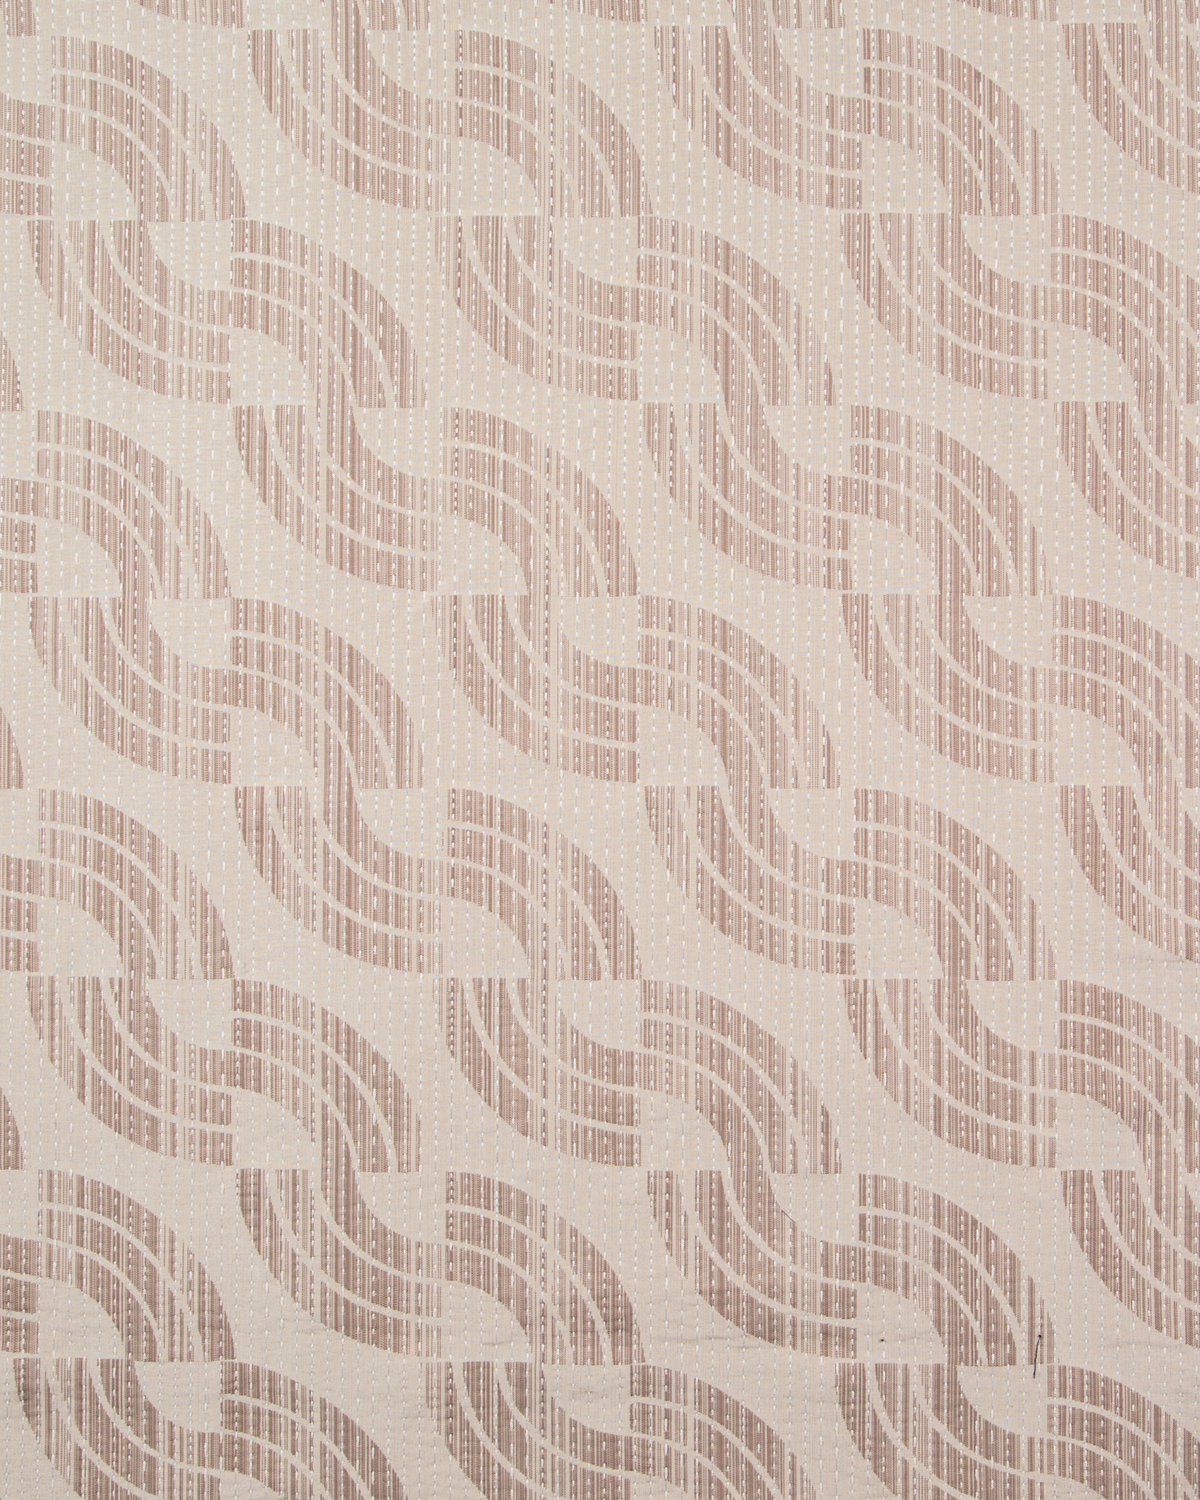 Sashiko Wave Fabric in Taupe